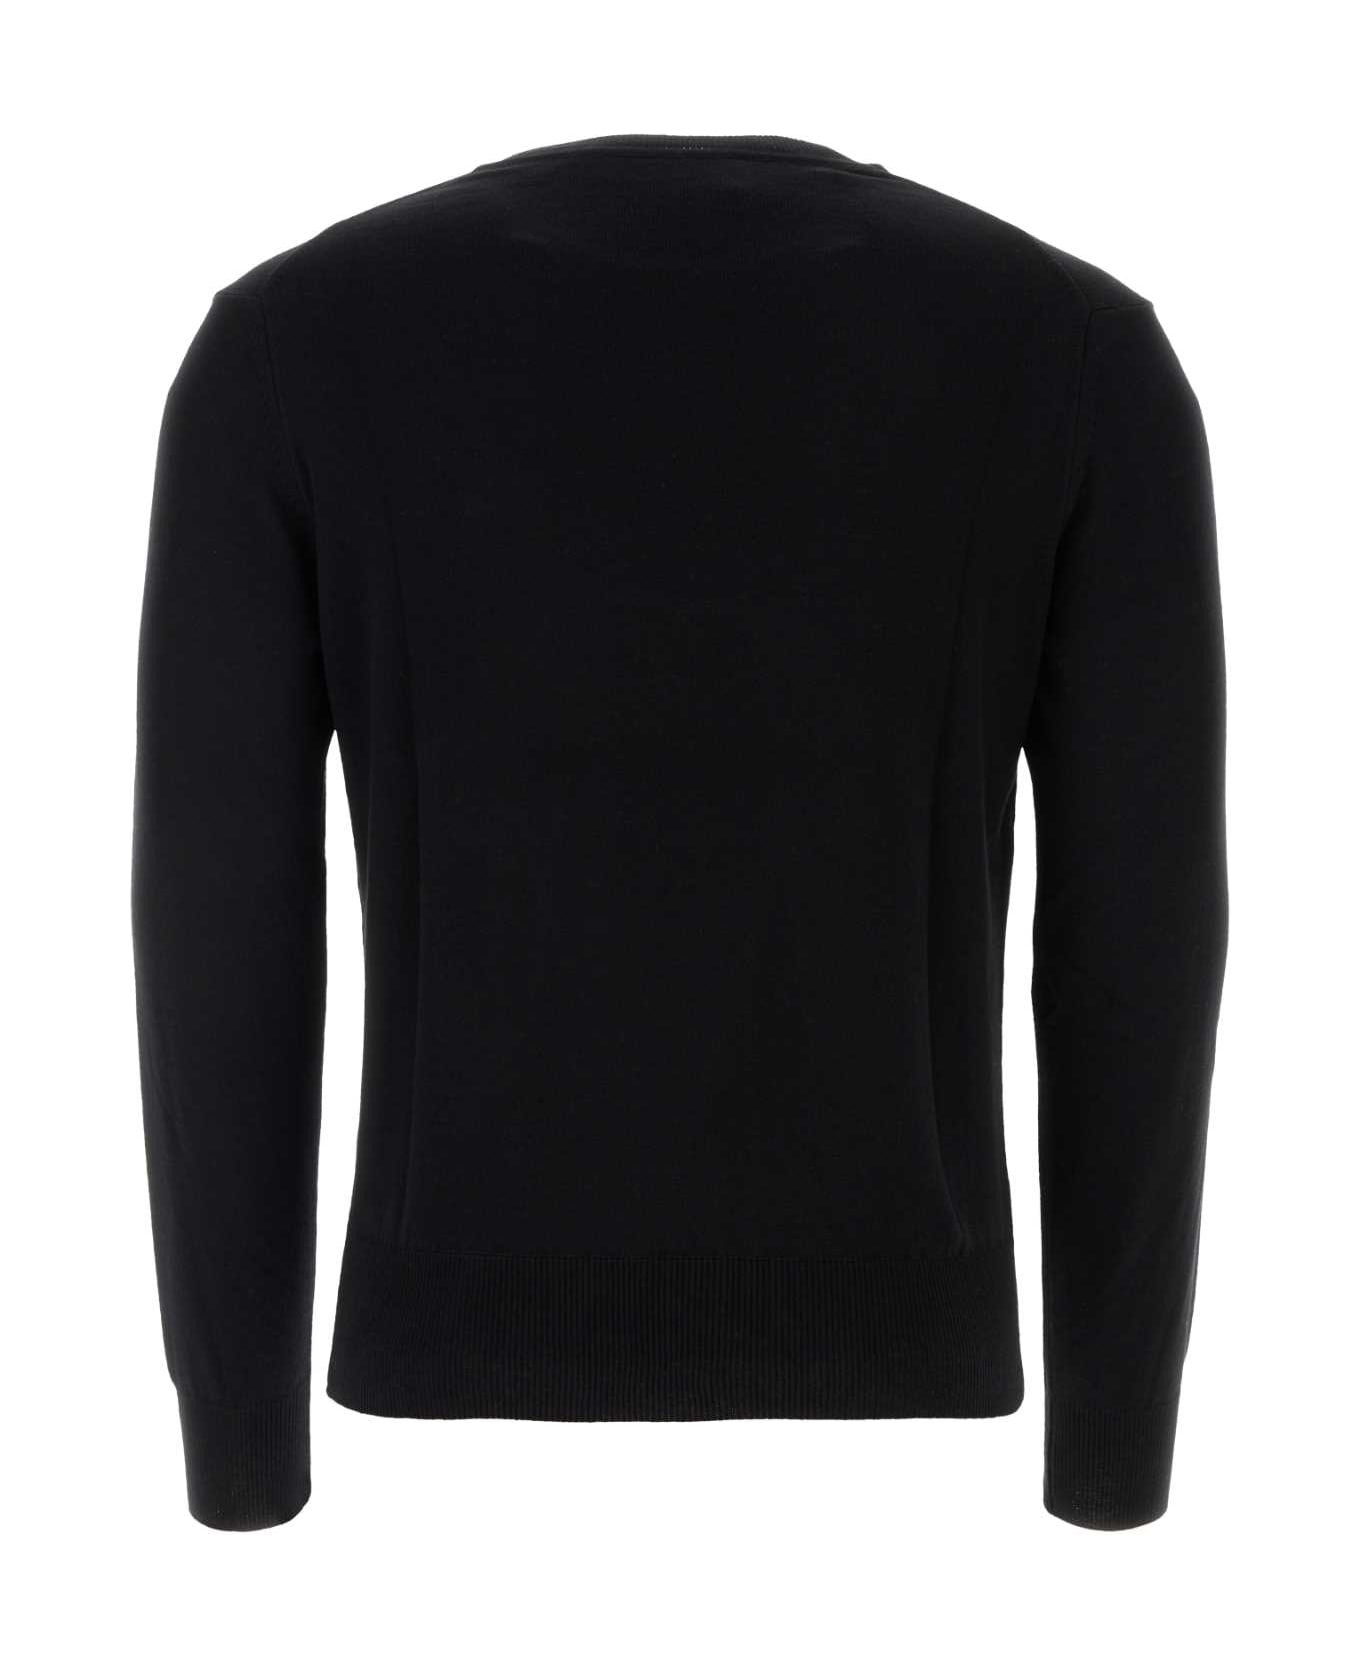 Vivienne Westwood Black Cotton Blend Sweater - Black